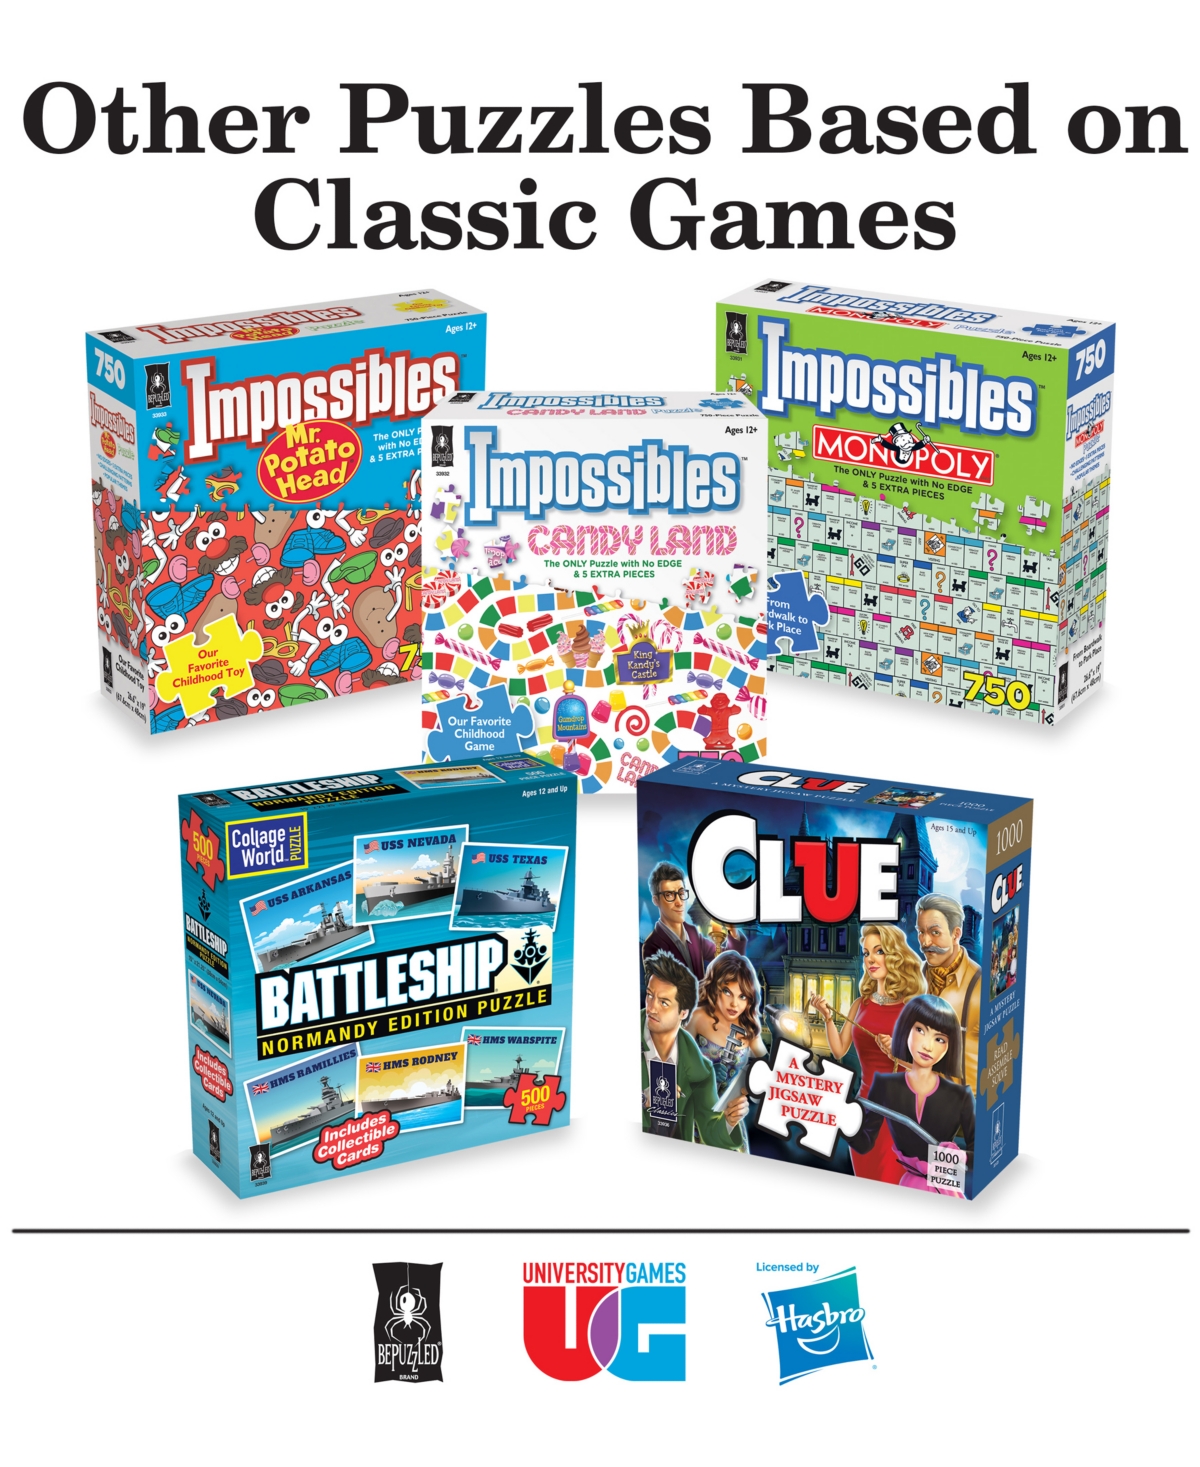 Shop Bepuzzled Hasbro Monopoly Impossible Puzzle Set, 750 Pieces In Multi Color